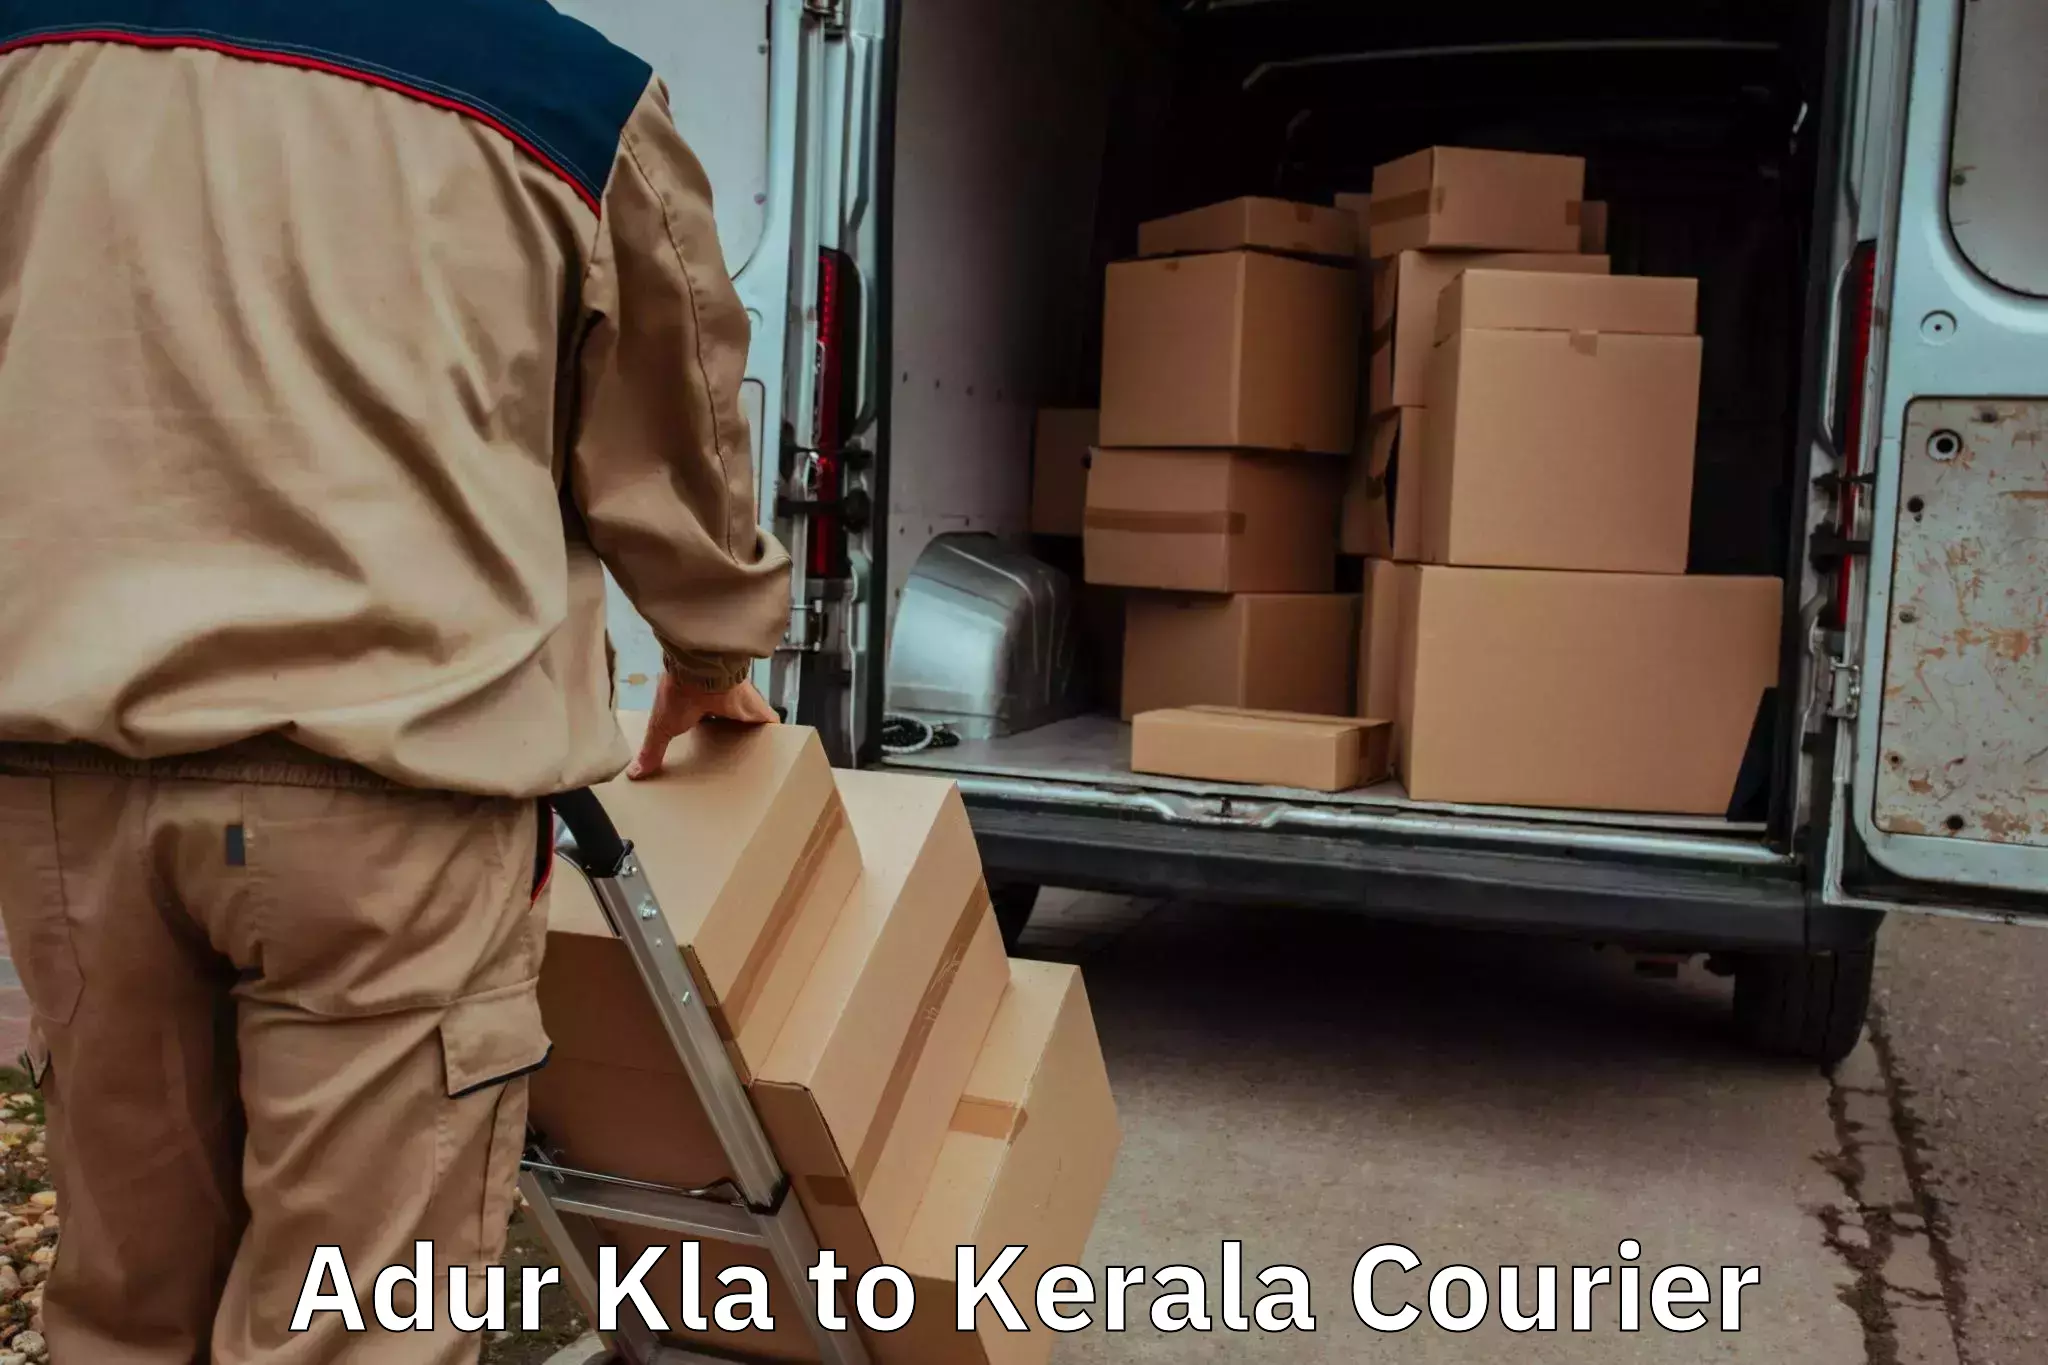 Professional moving company Adur Kla to Mahe